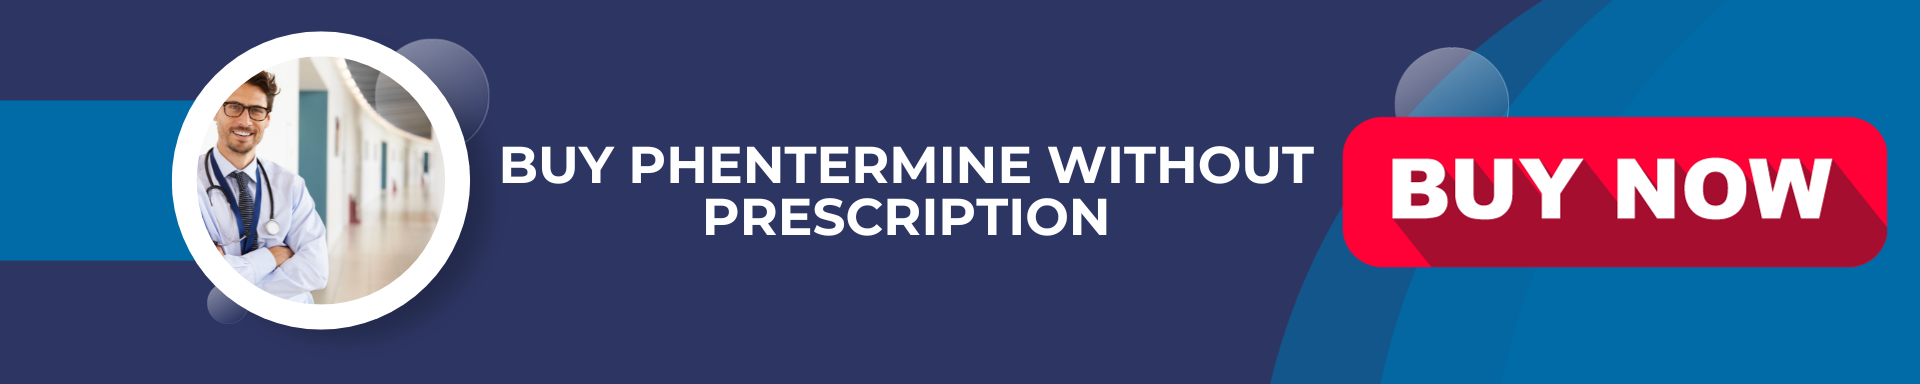 Achetez phentermine online